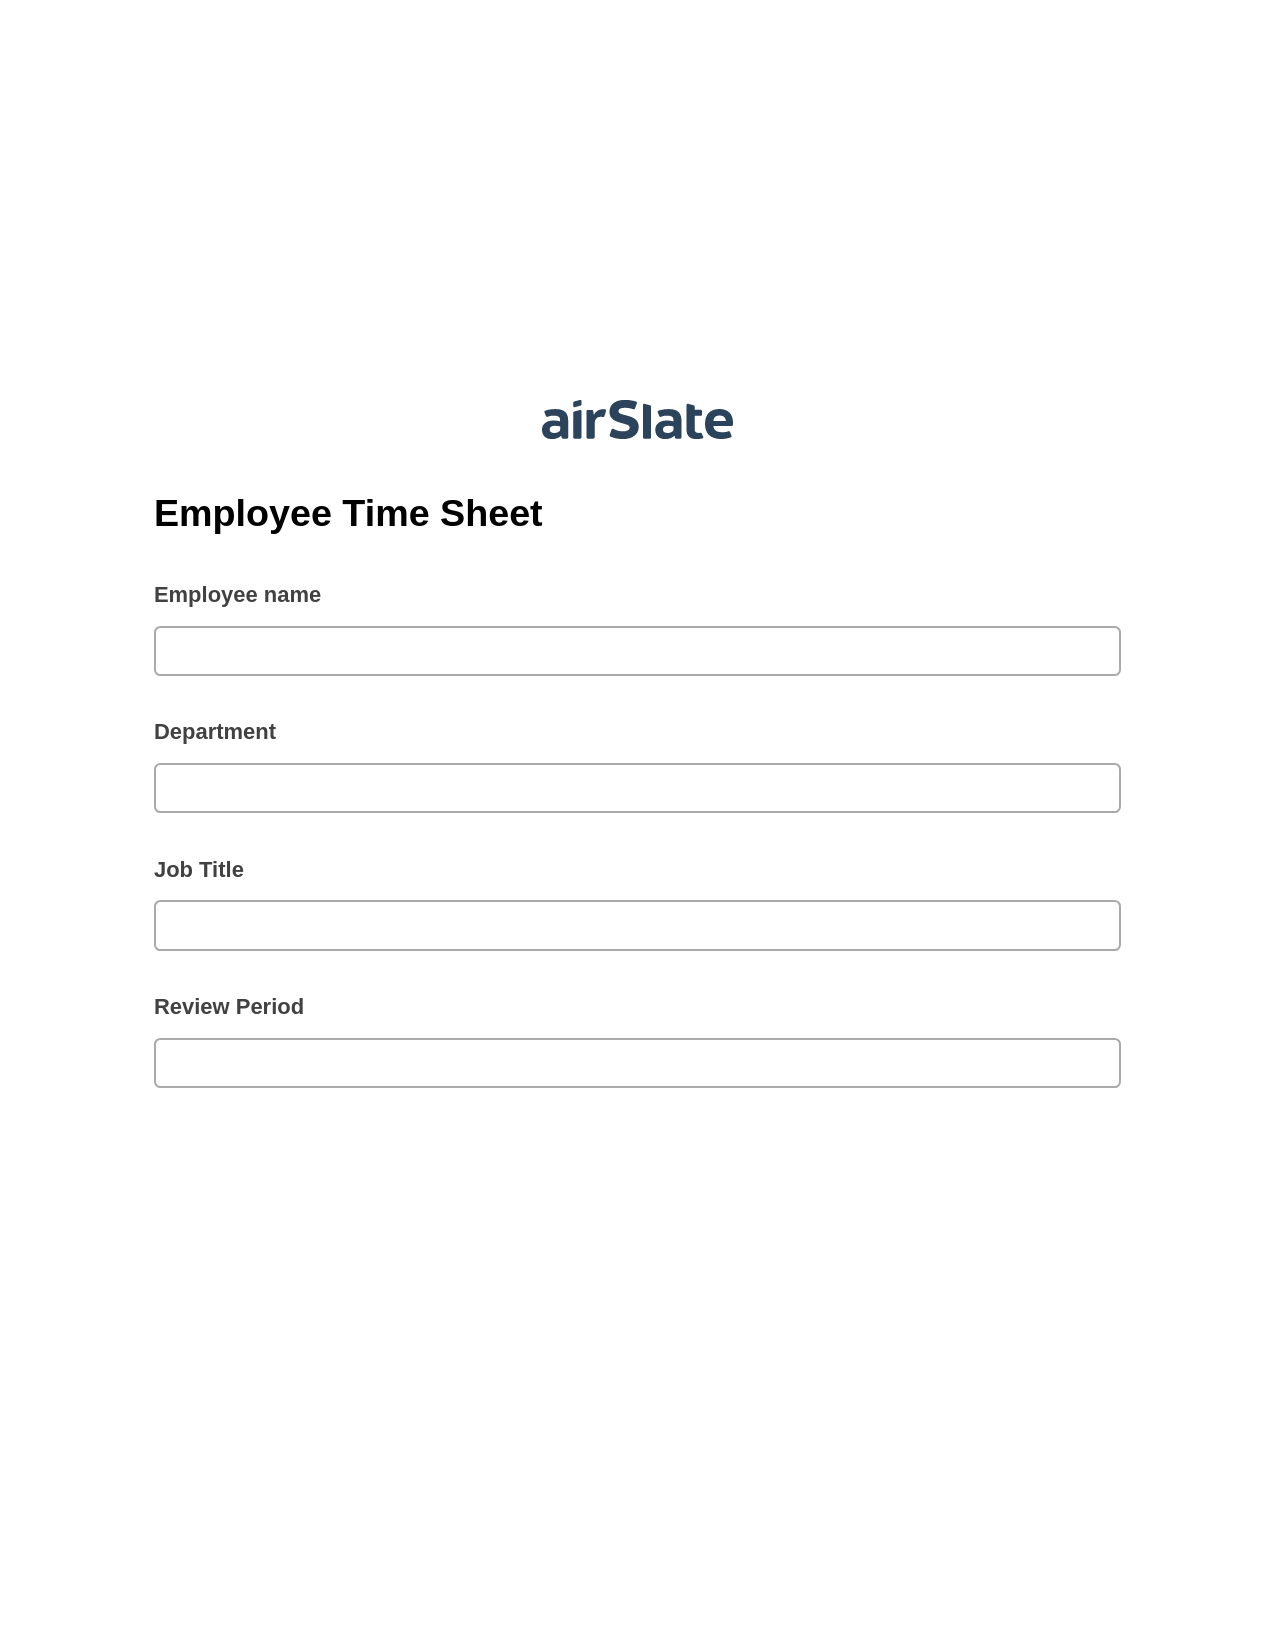 Multirole Employee Time Sheet Pre-fill from Litmos bot, Update Audit Trail Bot, Export to Smartsheet